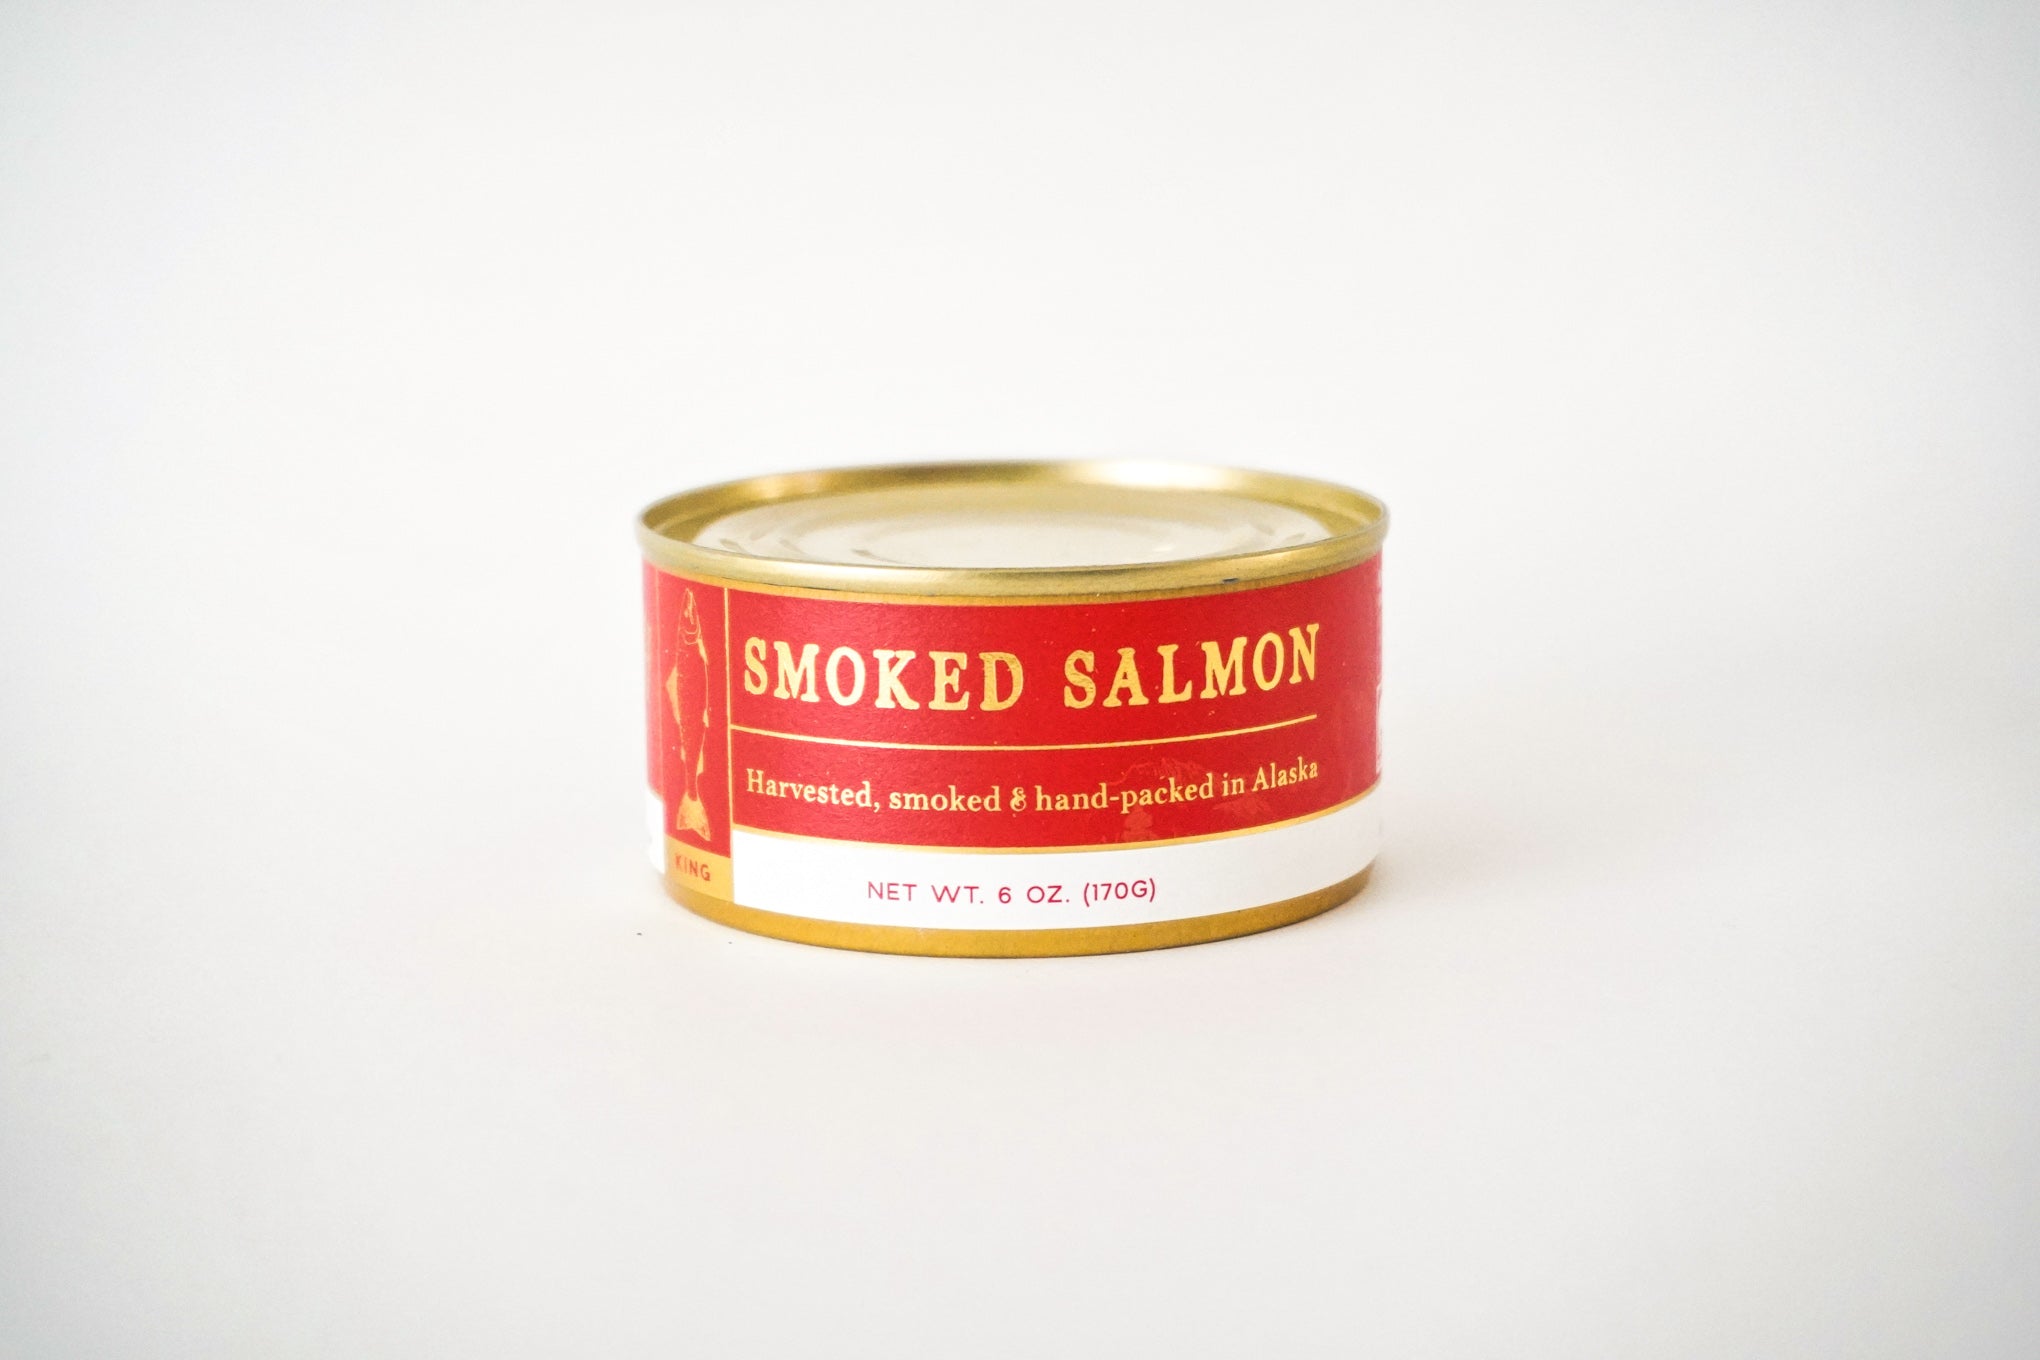 Smoked King Salmon can